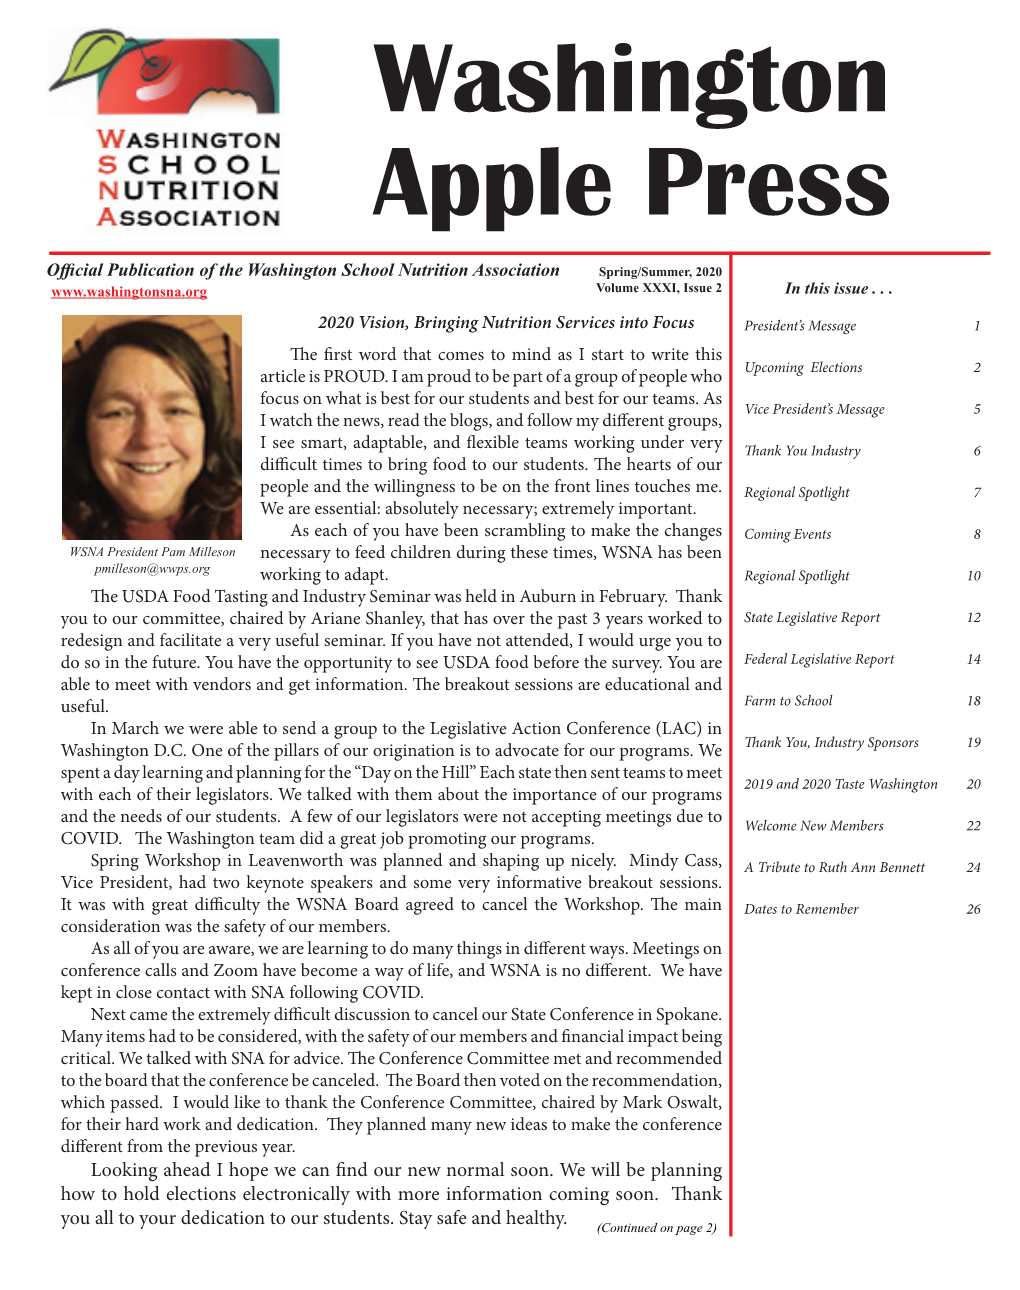 Washington Apple Press